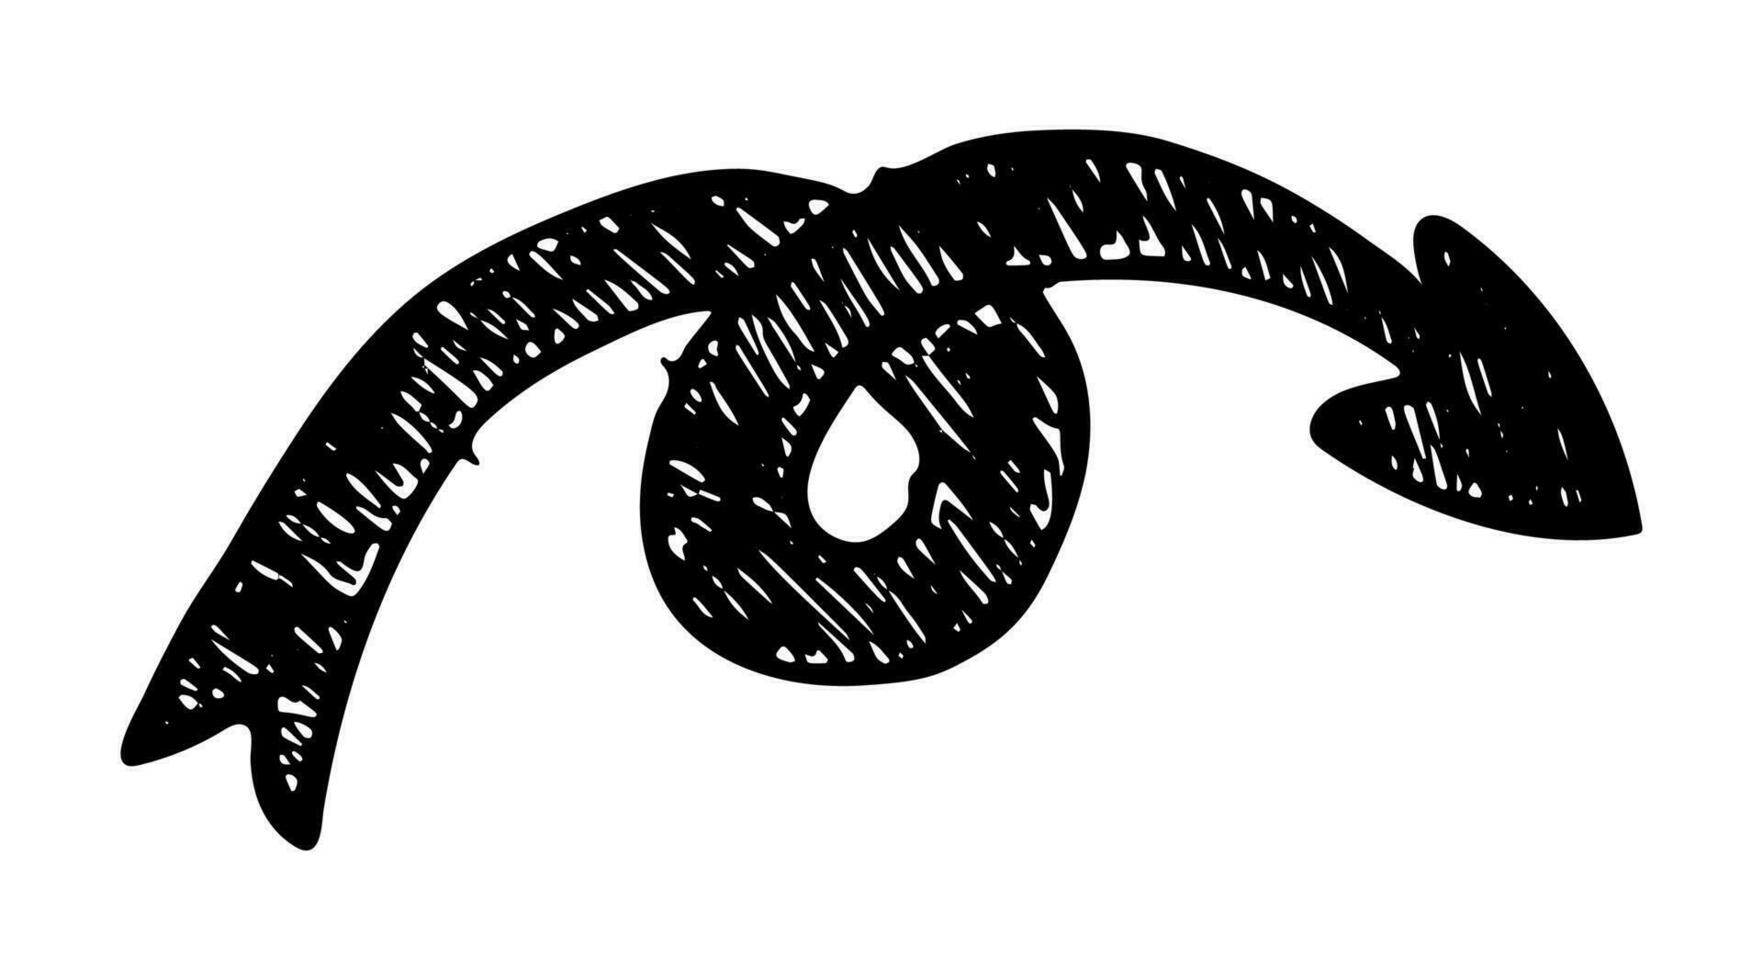 svart hand dragen pil. skiss av klotter pil isolerat på vit bakgrund. vektor illustration.